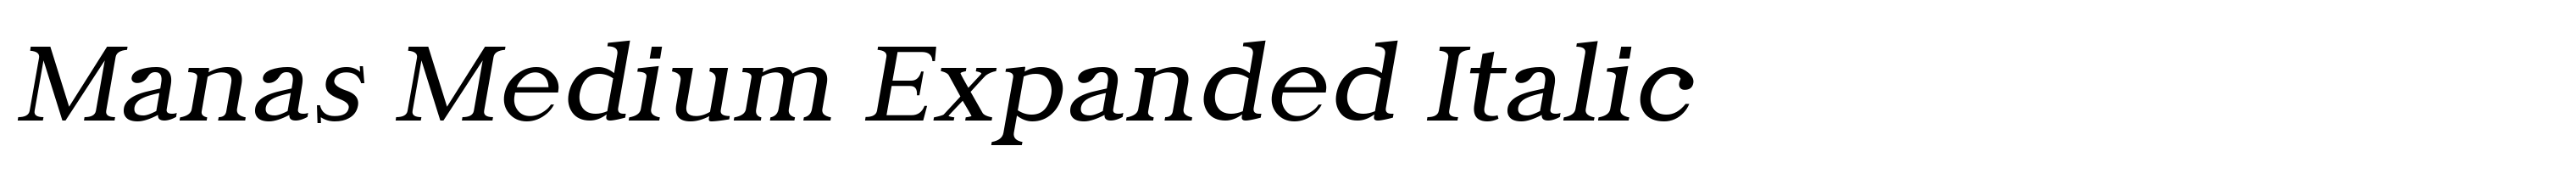 Manas Medium Expanded Italic